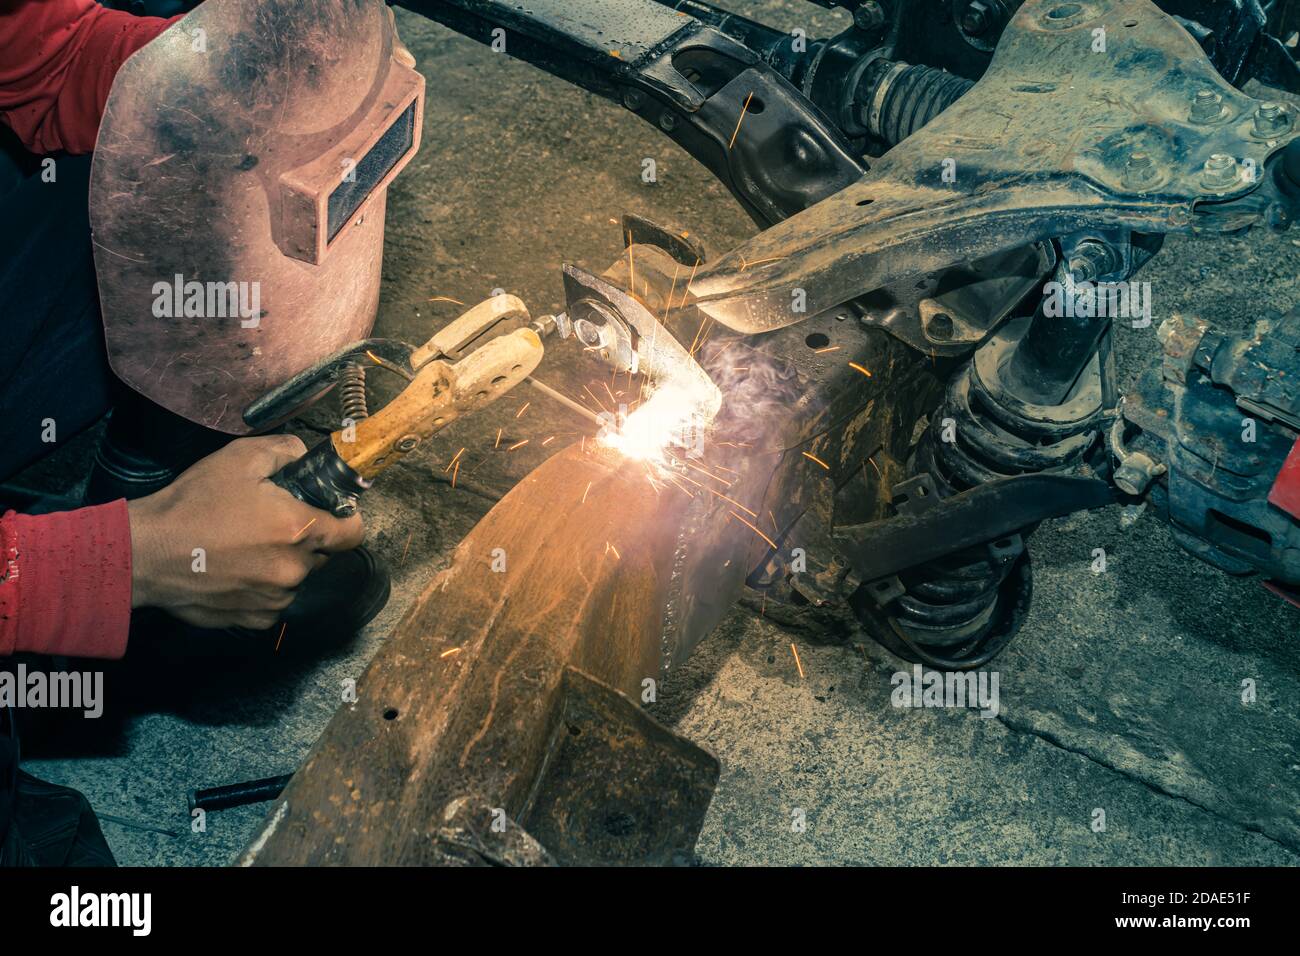 Hand of Welder Welding Metal or Steel of Car Construction in Garage on Top View in Vintage Tone Stock Photo